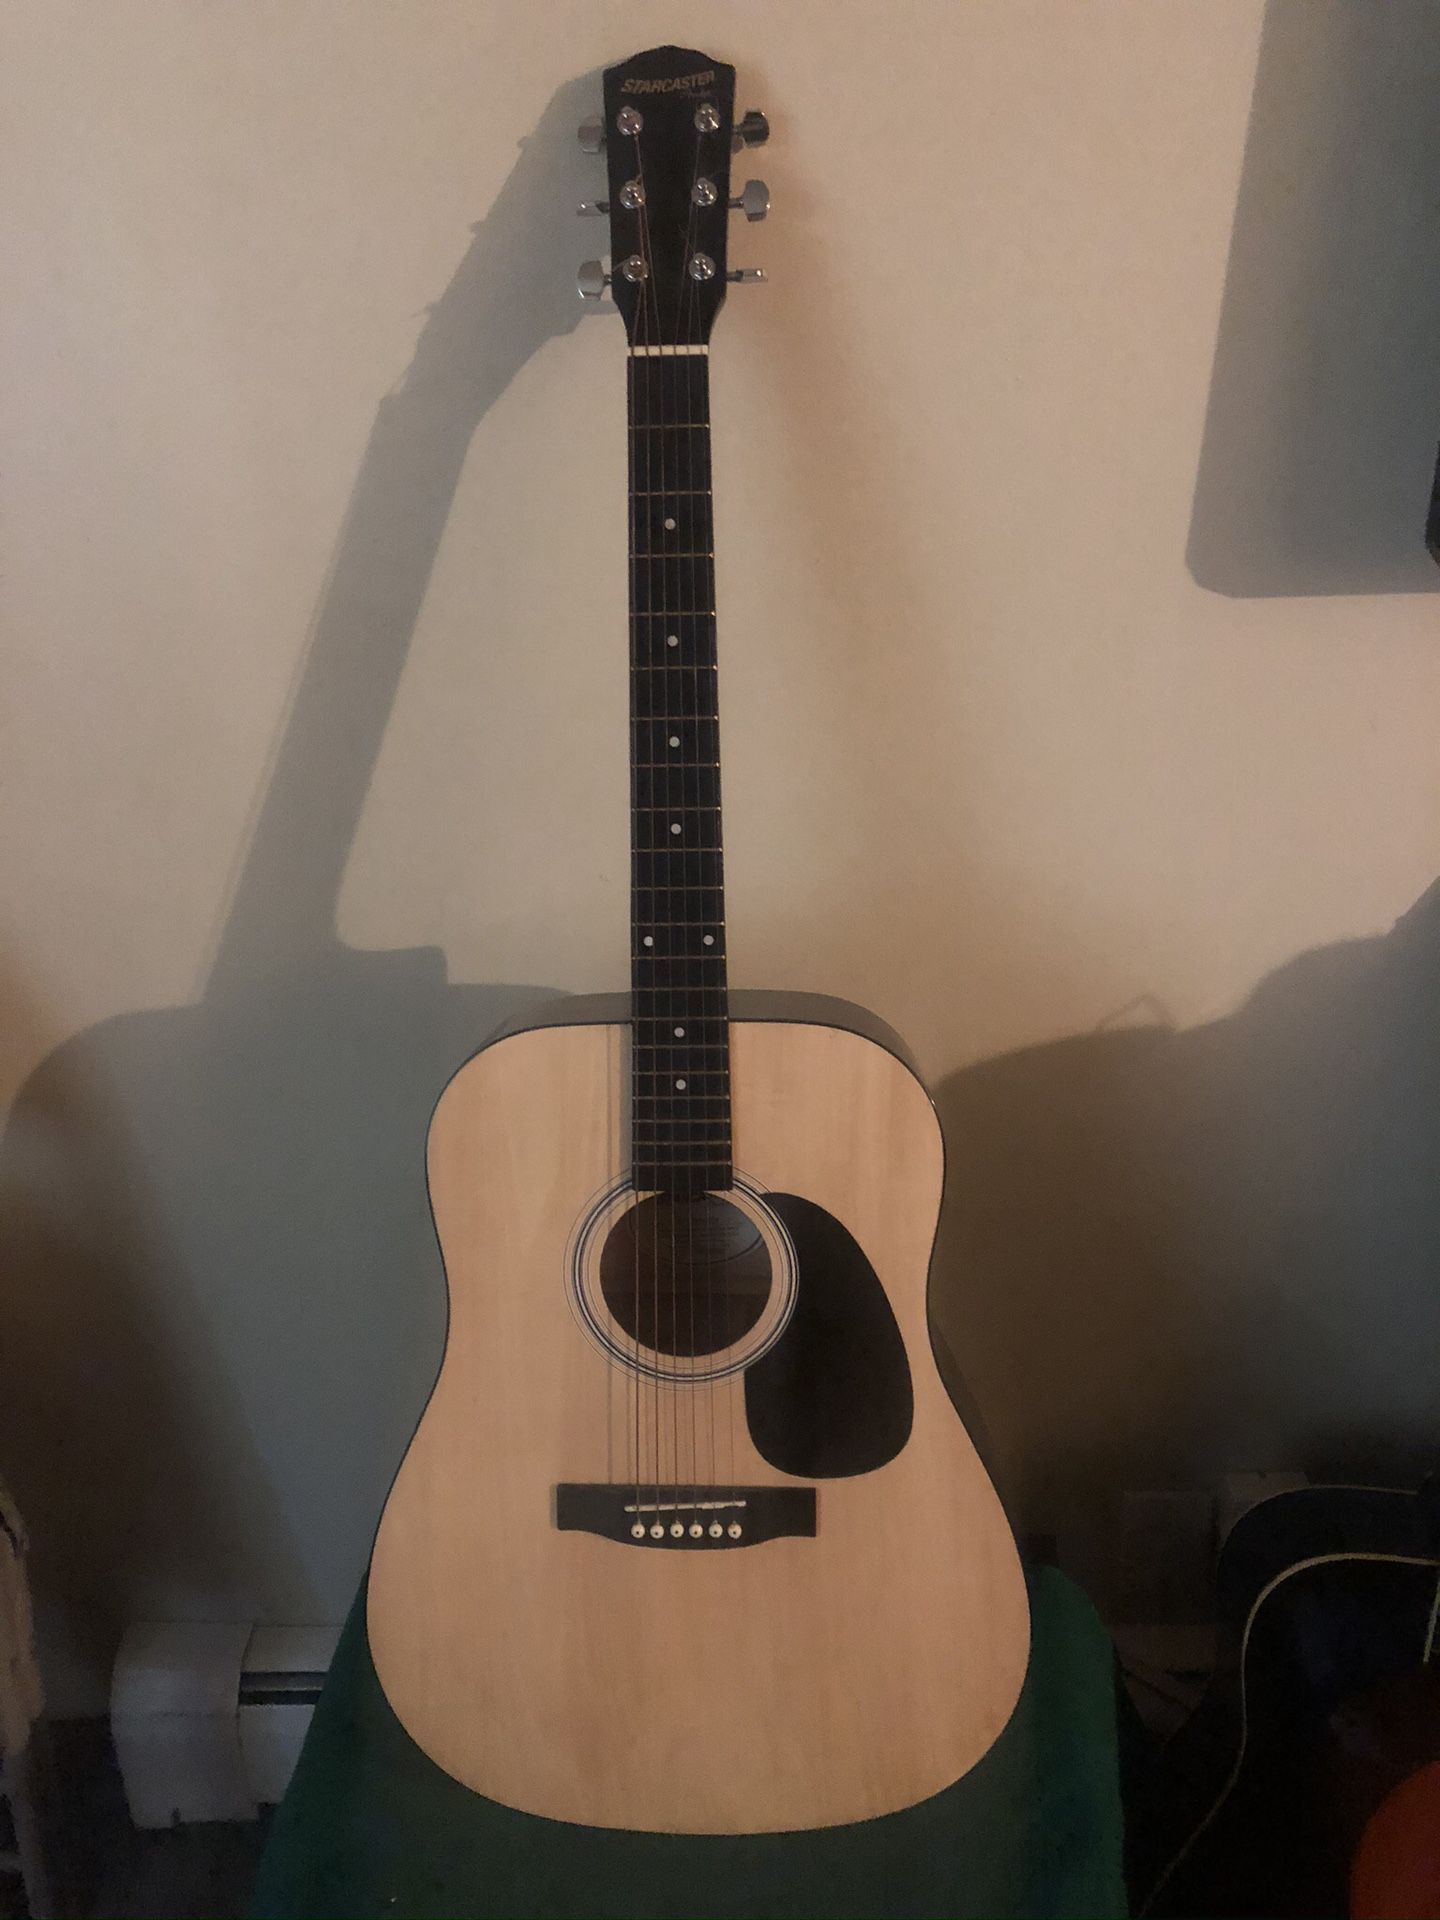 Fender Starcaster acoustic guitar